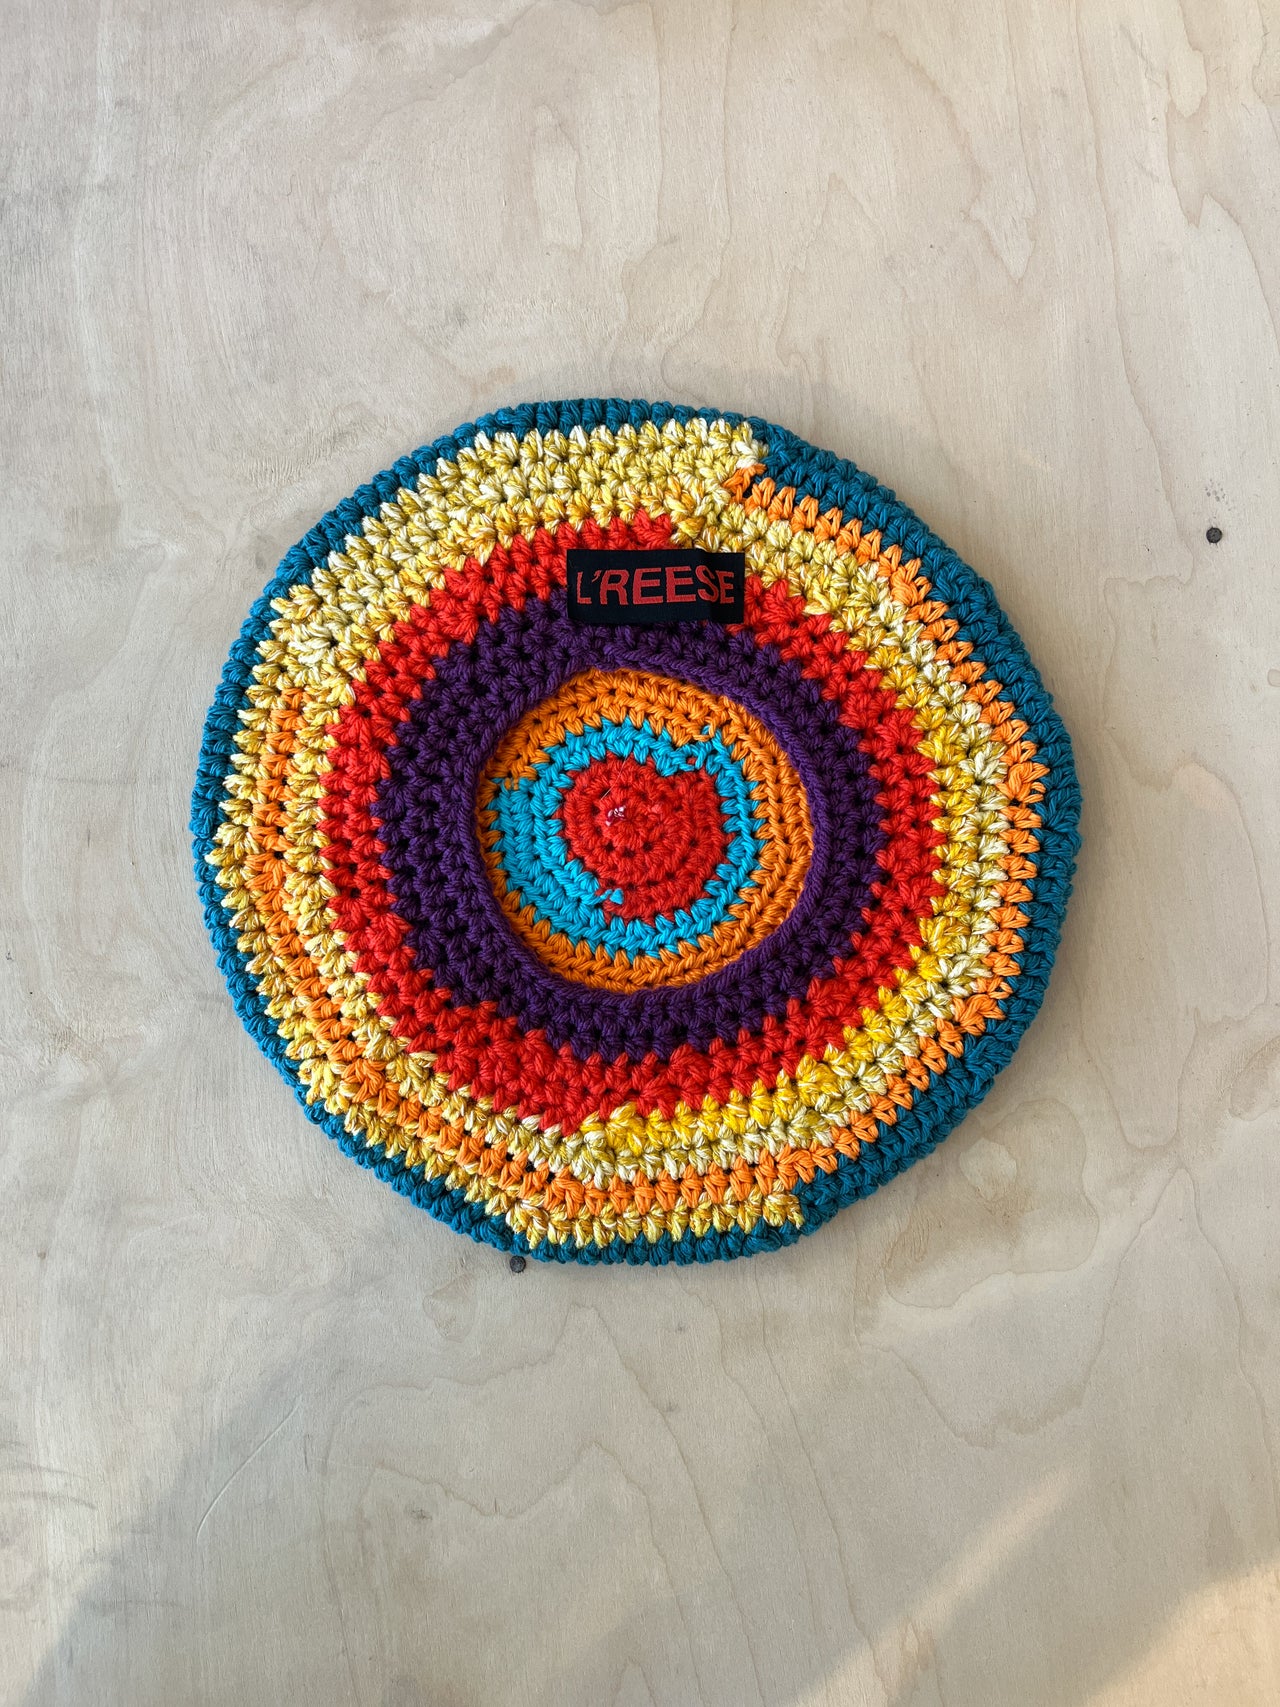 02 Crochet Beret (Teal/Orange)